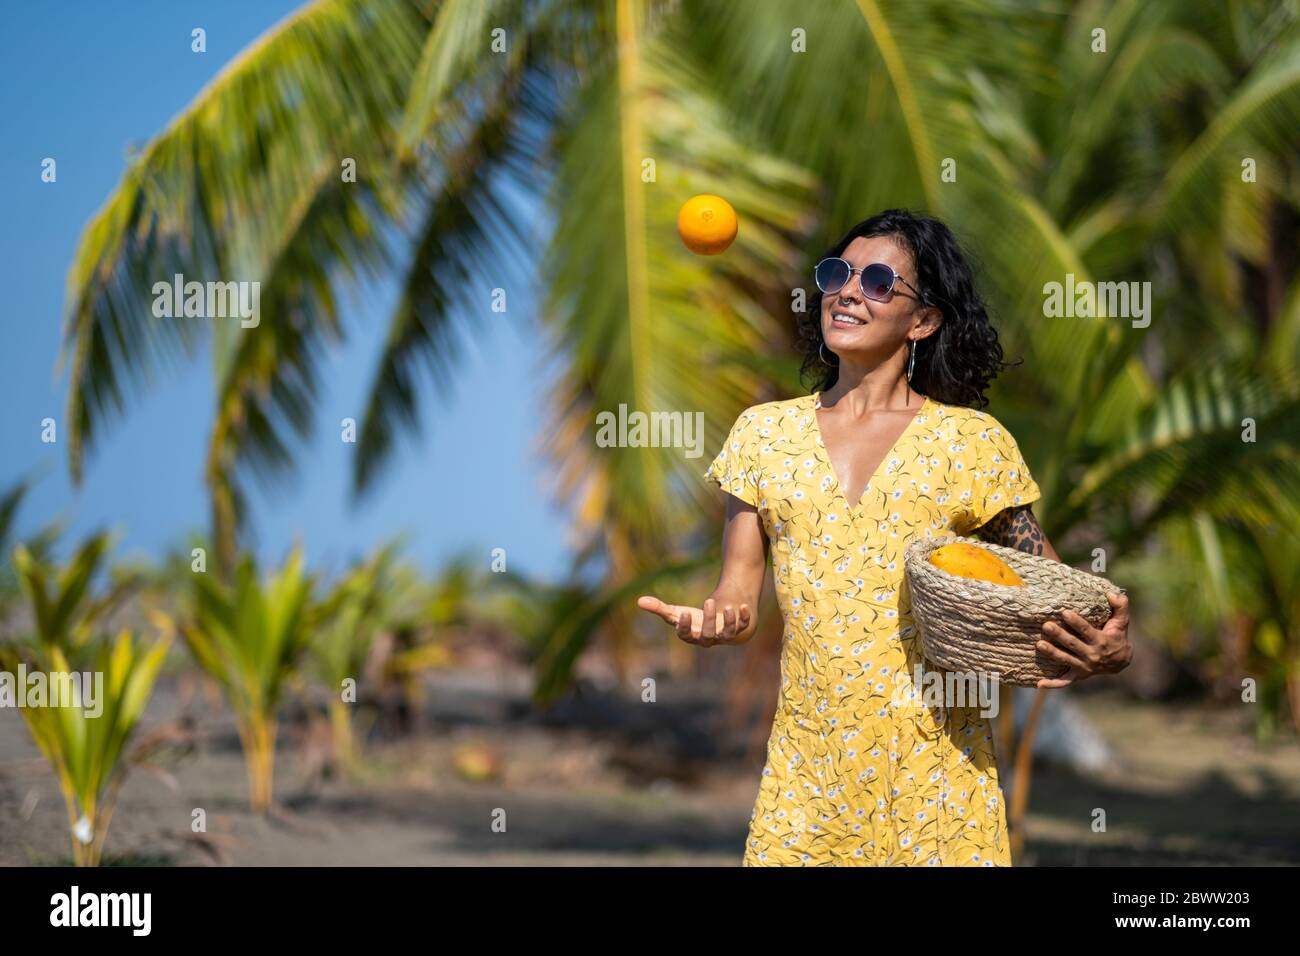 Junge Frau mit Obstkorb am Strand, Costa Rica Stockfoto